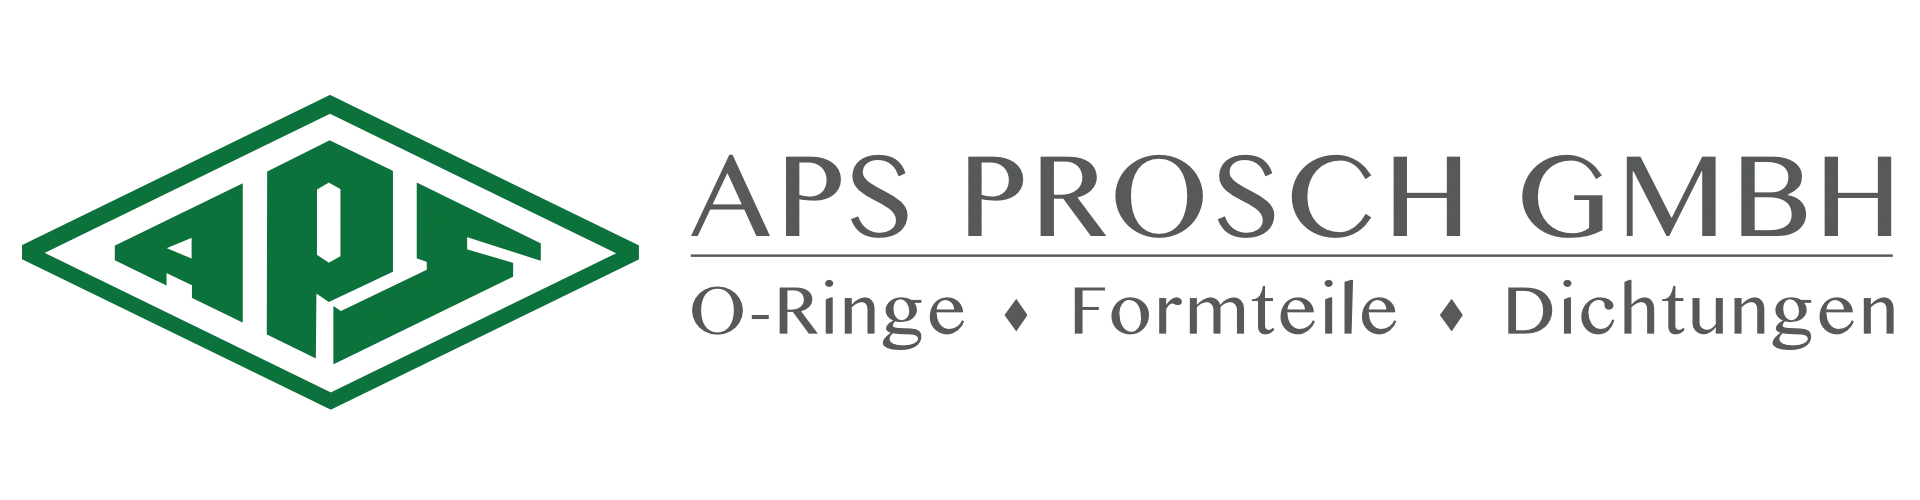 APS PROSCH Logo png